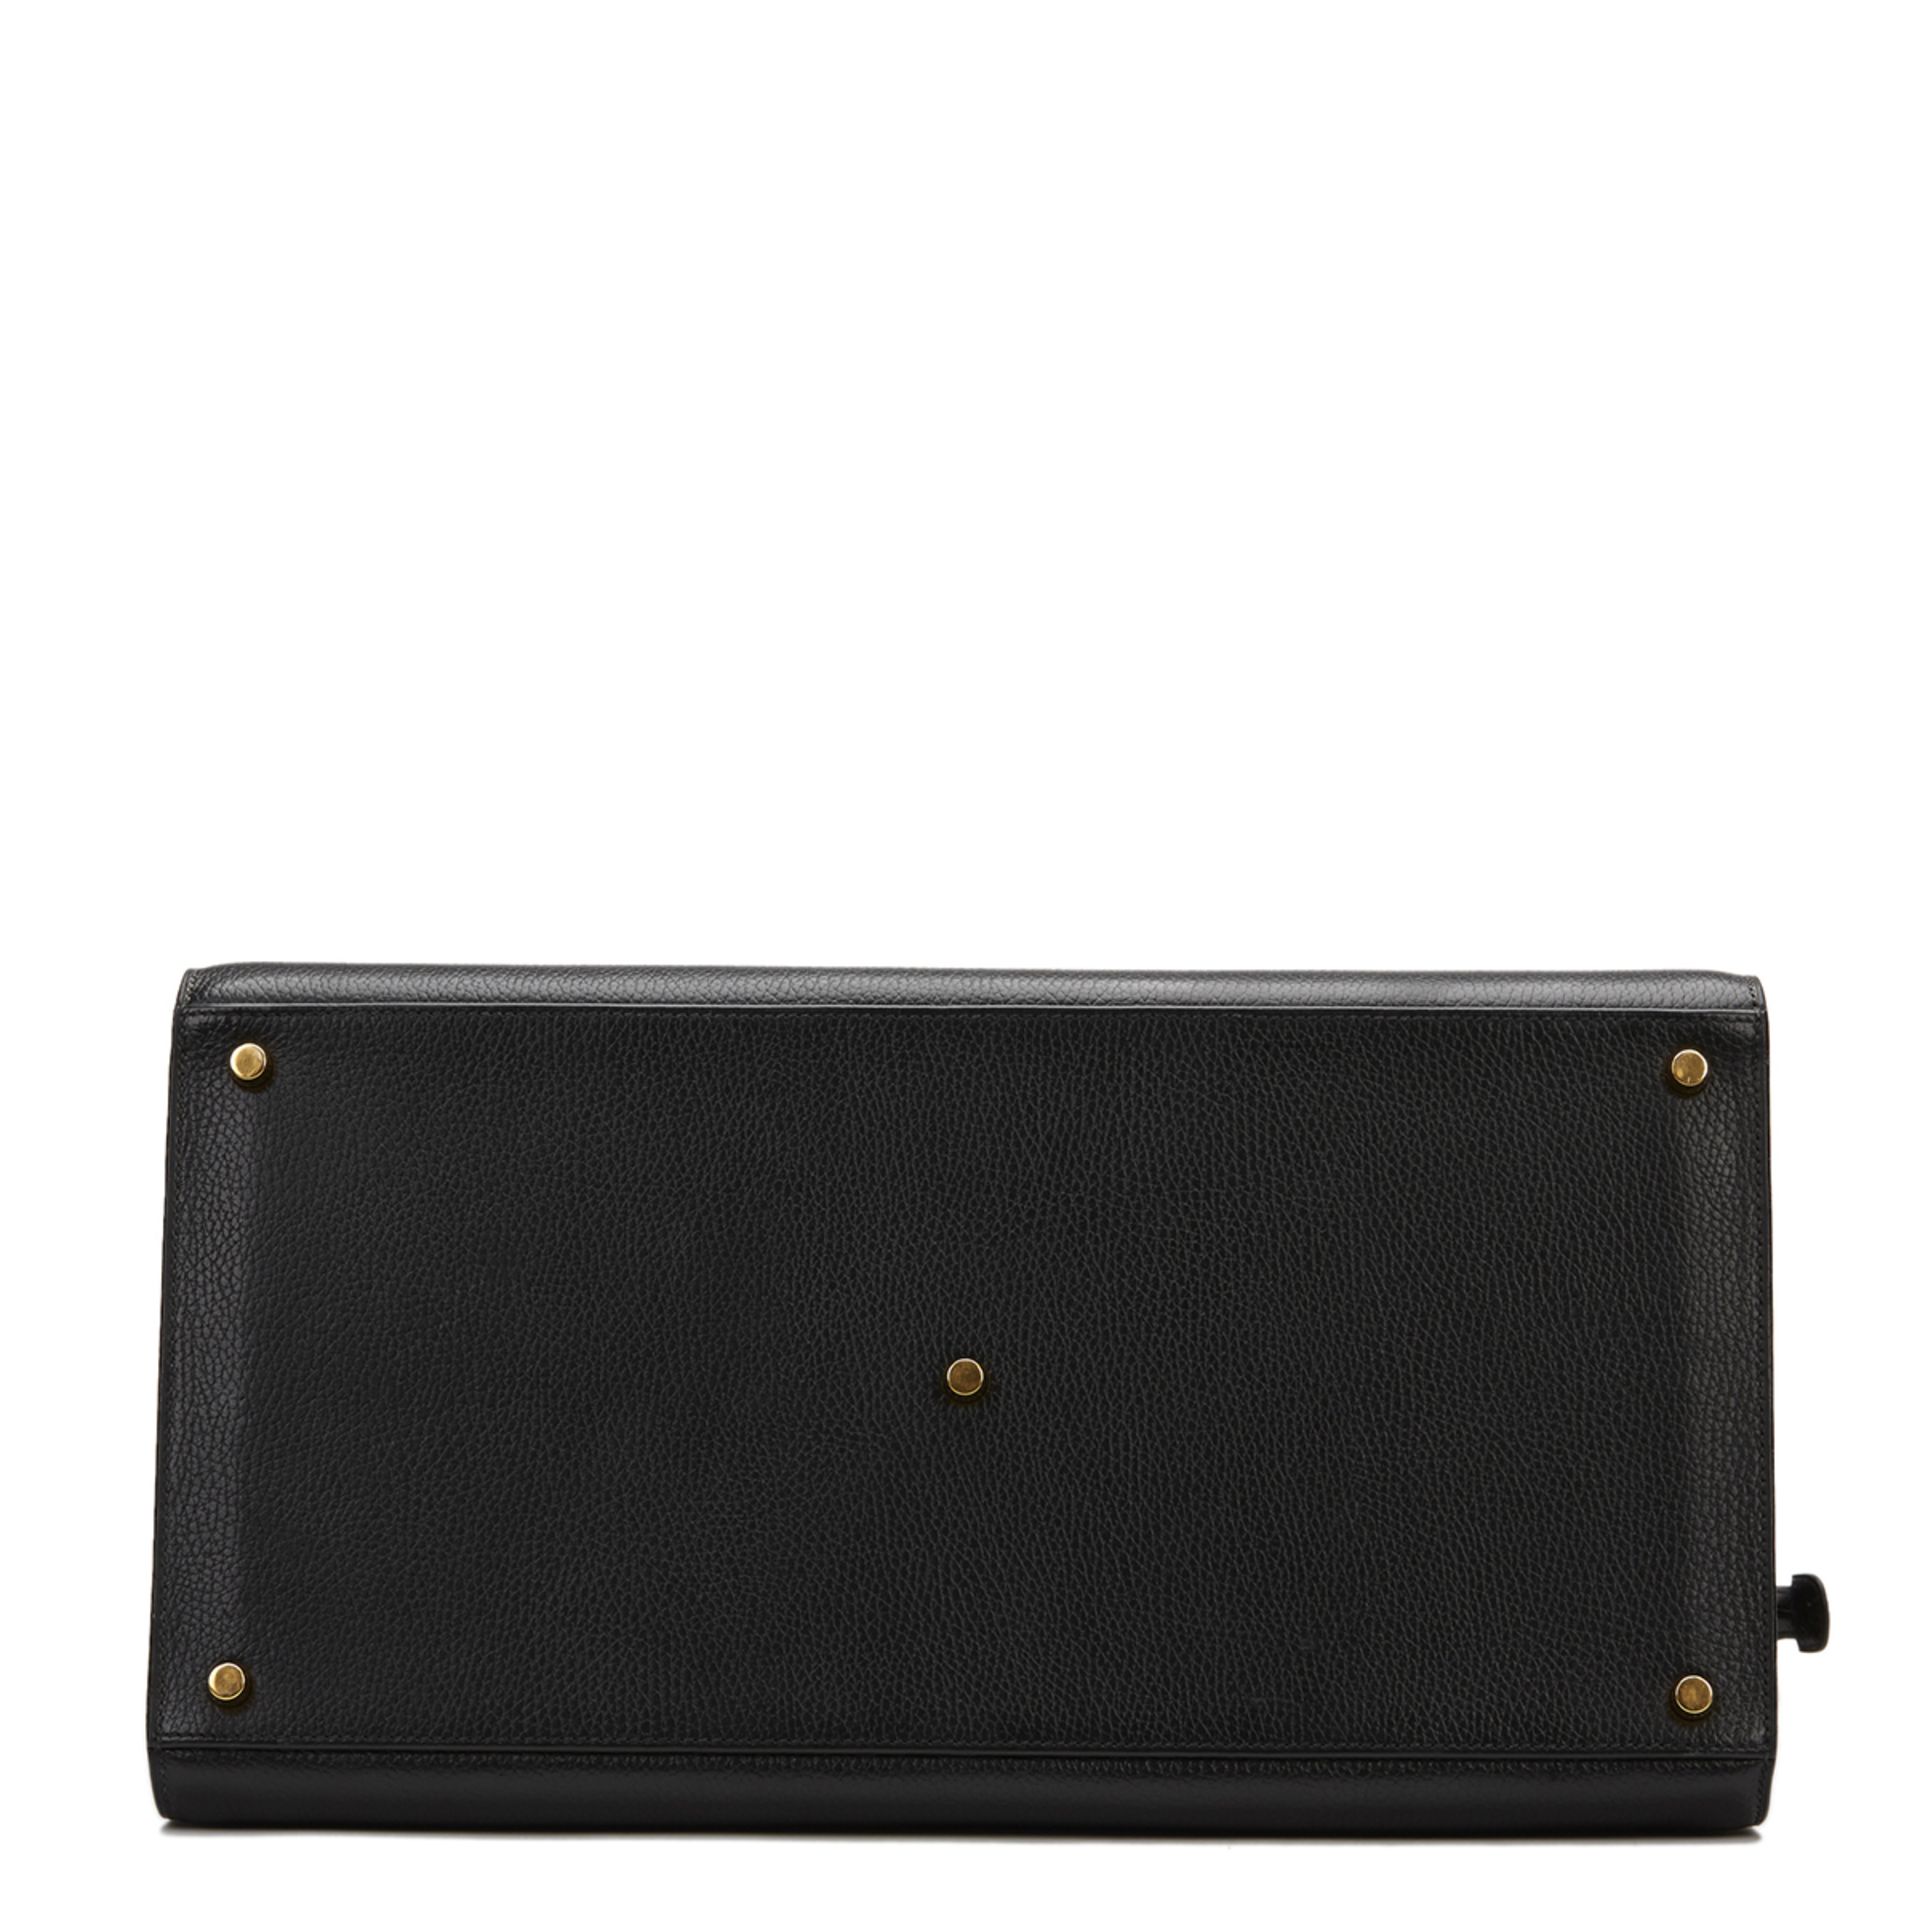 Hermès Black Ardennes Leather & Barenia Leather Vintage Airport Bag - Image 6 of 10